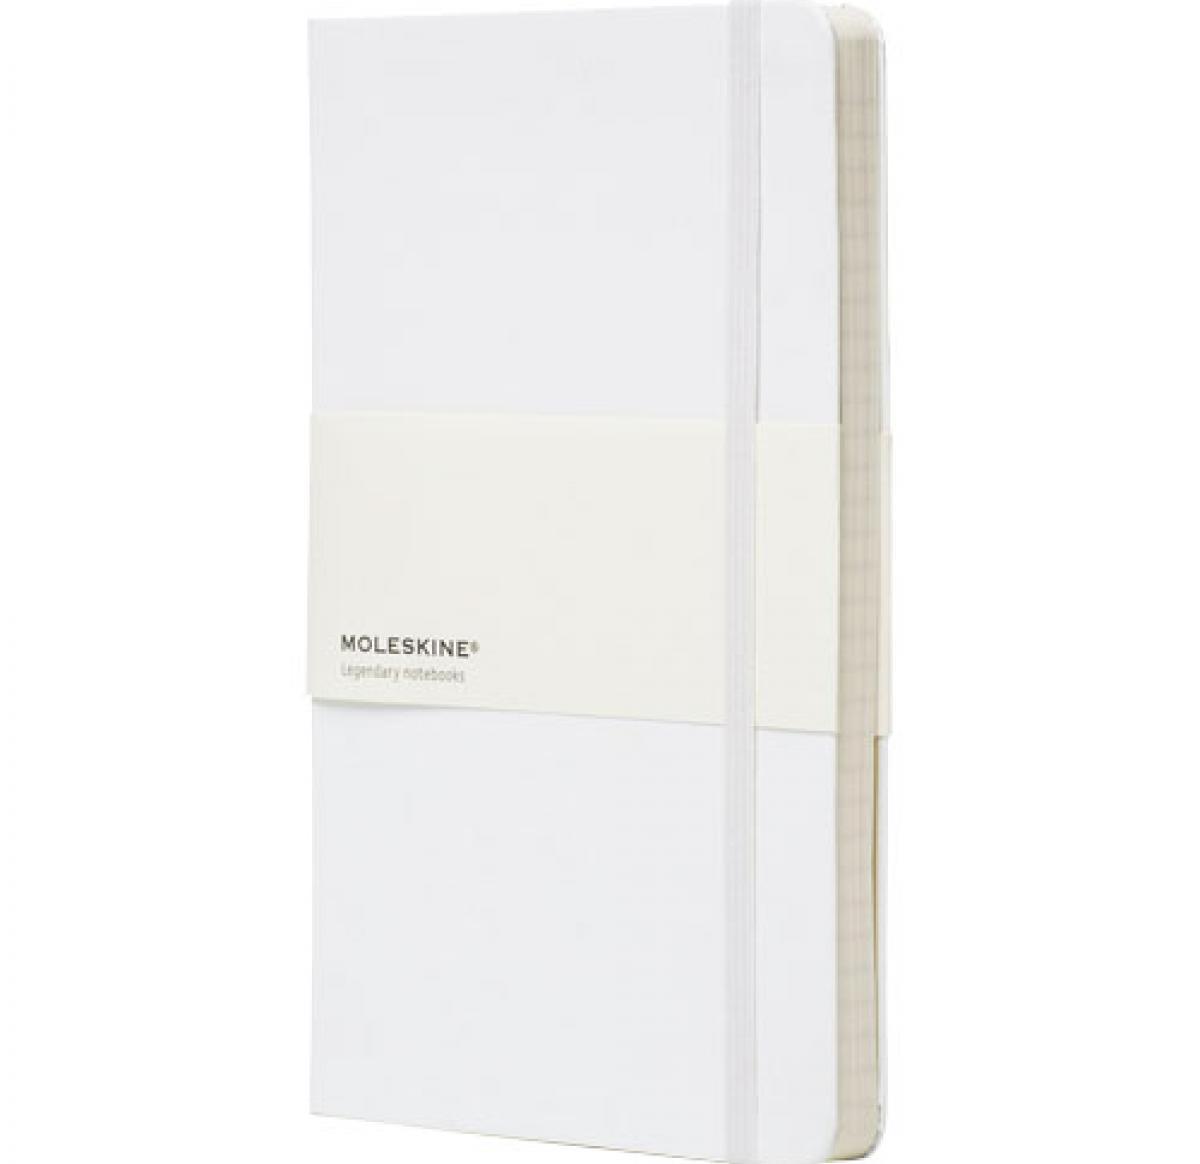 Branded Moleskine Classic L Hard Cover Notebooks - Squared